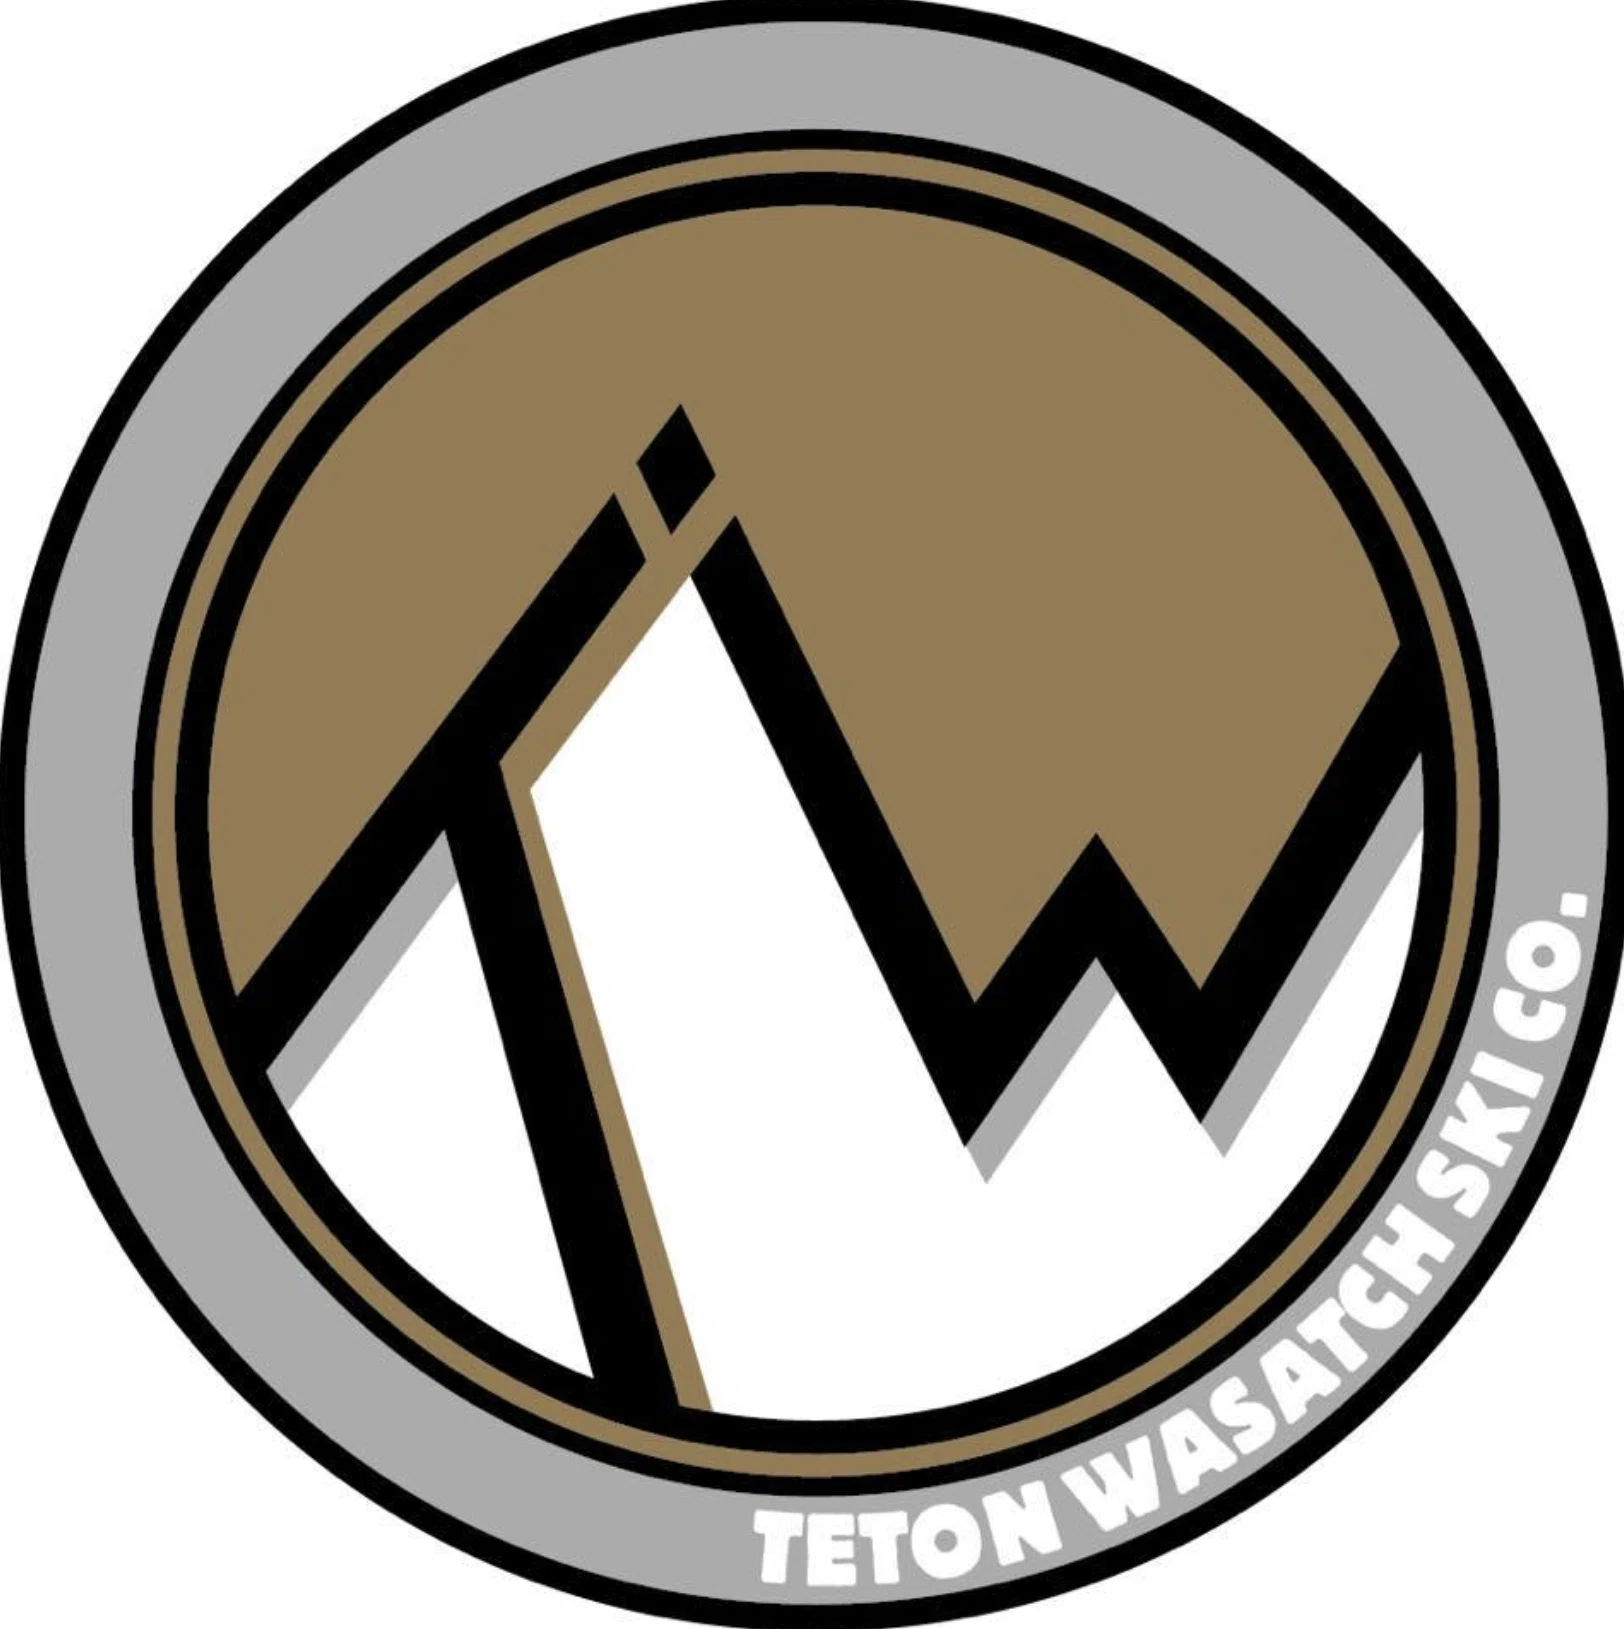 Teton Wasatch Ski Co.